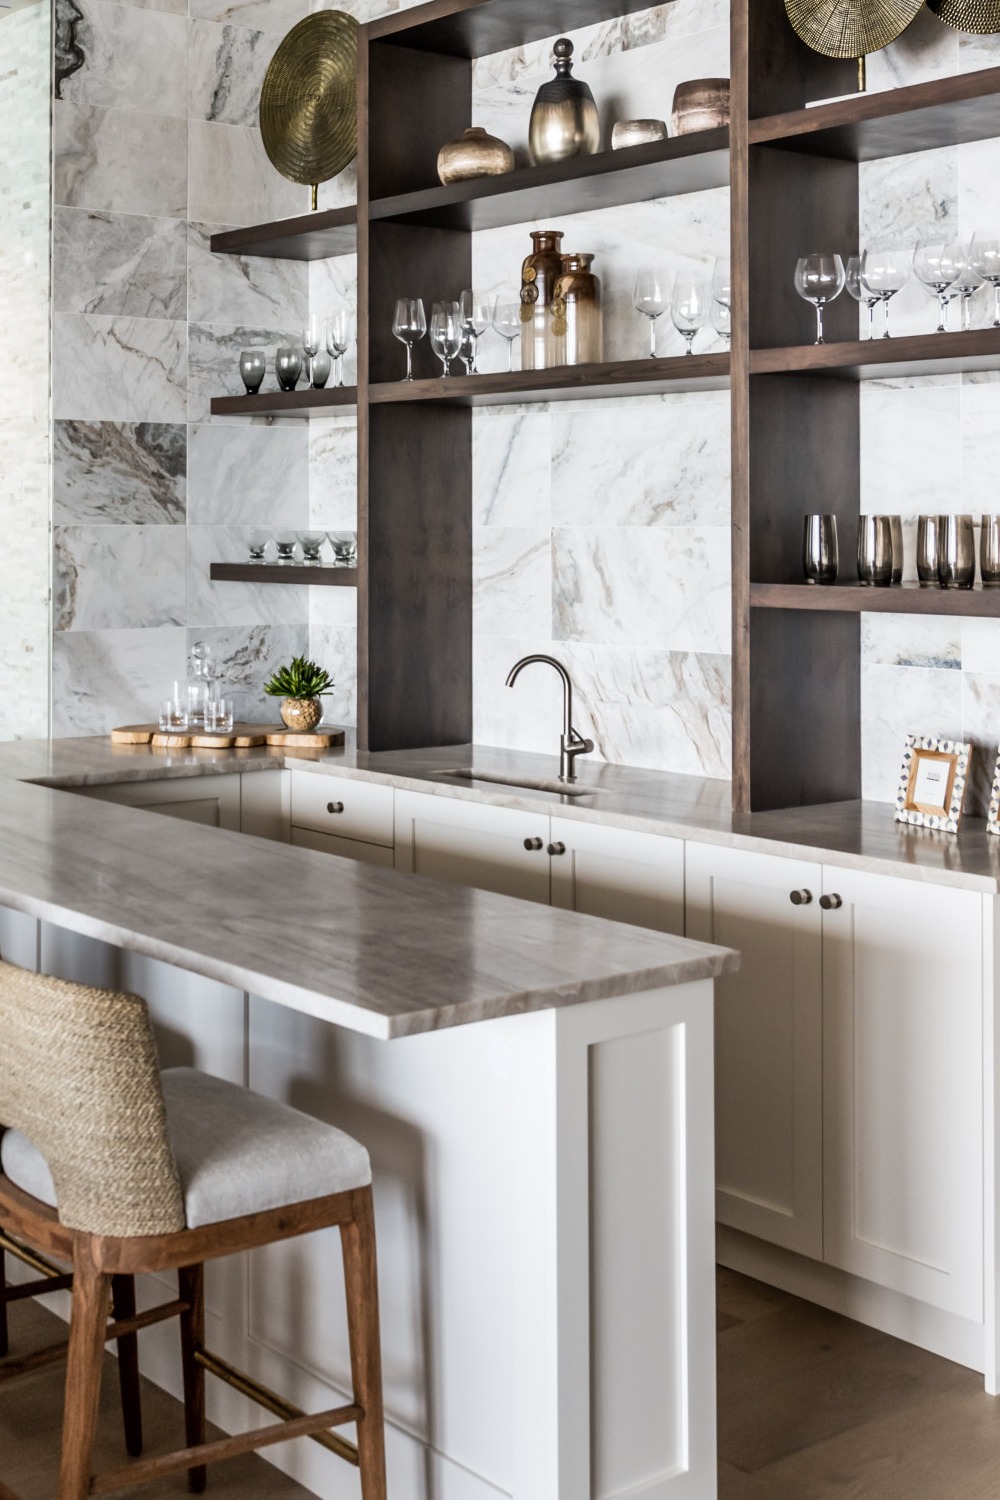 Sleek White Kitchen Stone Tile Backsplash Modern Cabinets Lights Contrast Dark Design